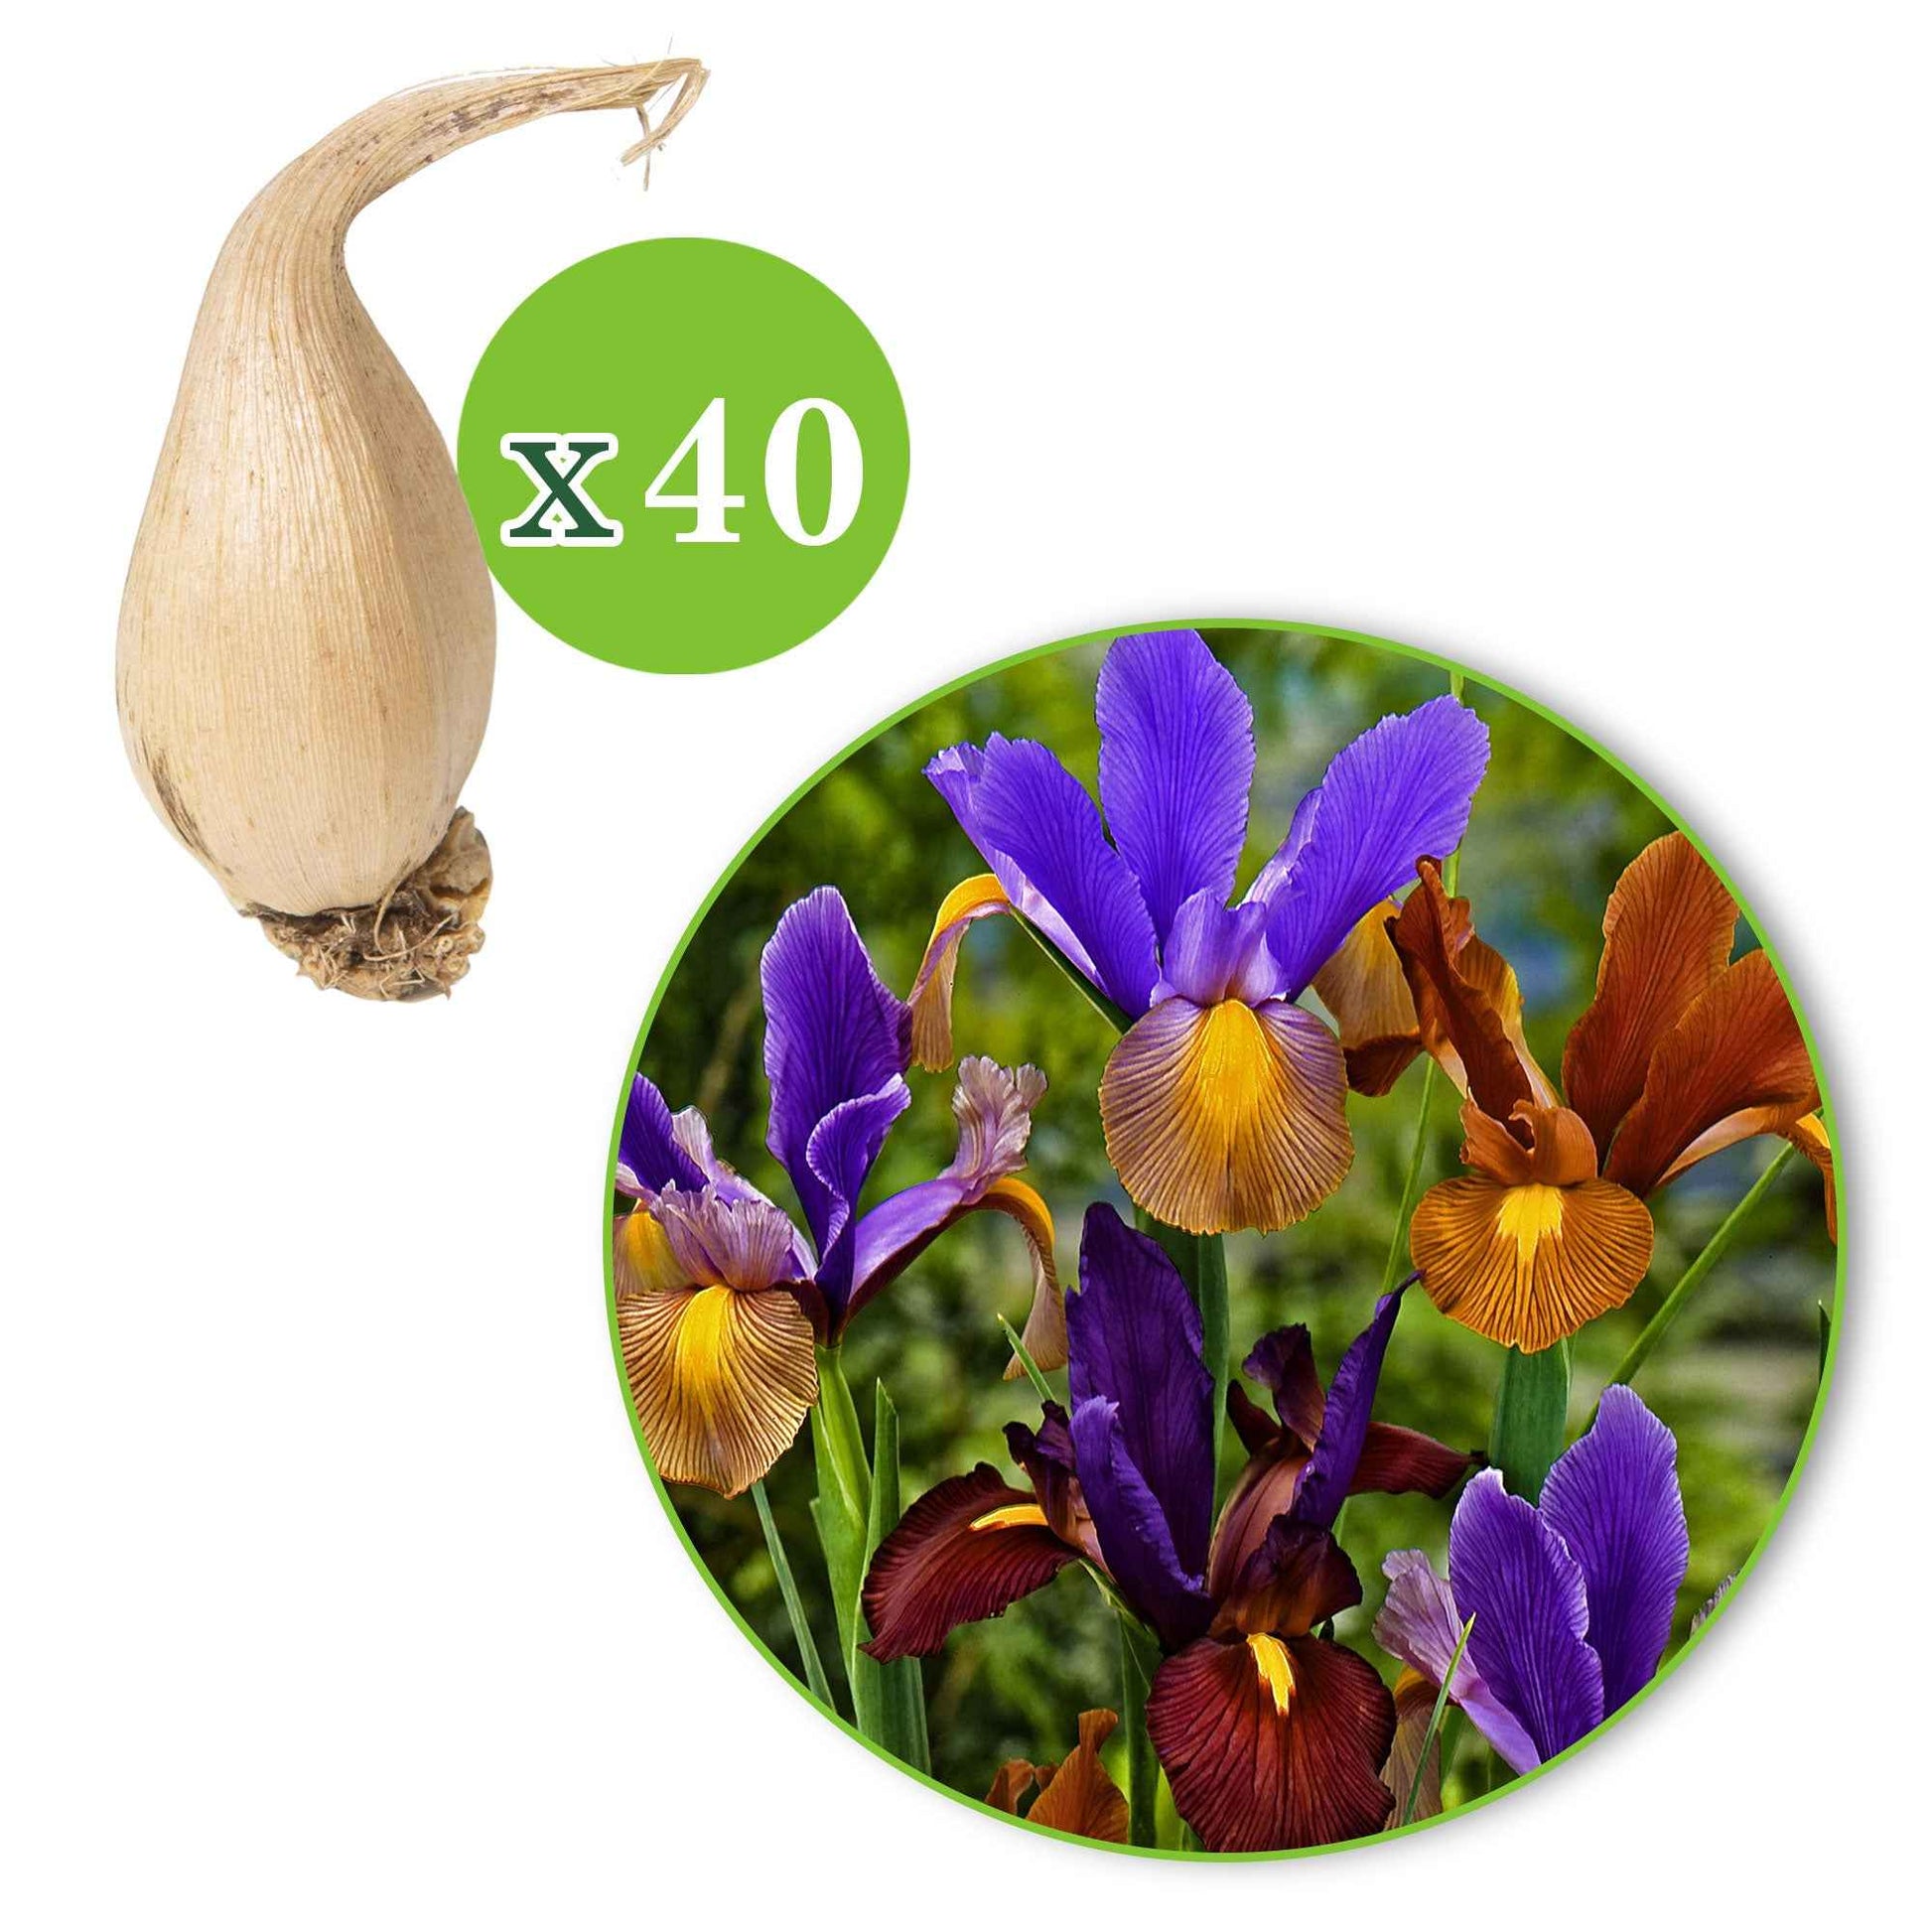 Iris 'Tiger' (x40) - Iris hollandica 'tiger' - Irissen - Iris